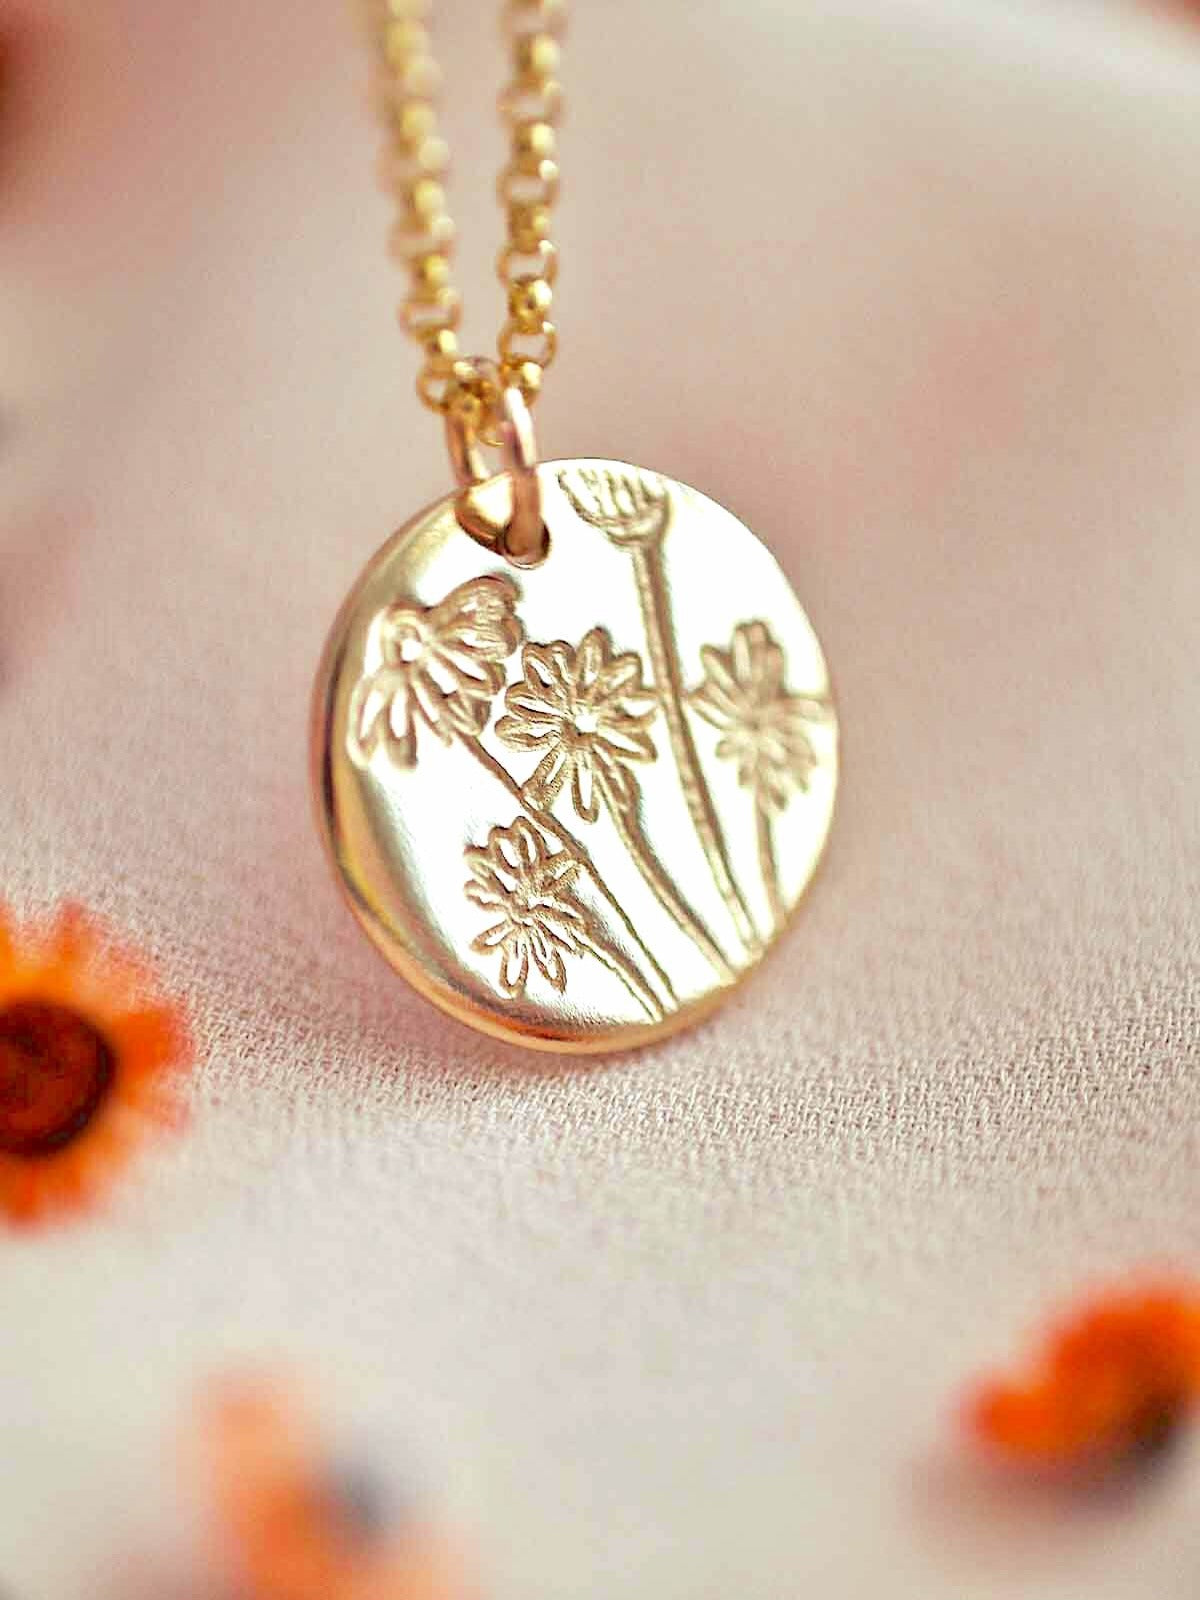 Swan River Daisy Australian birthflower necklace gold